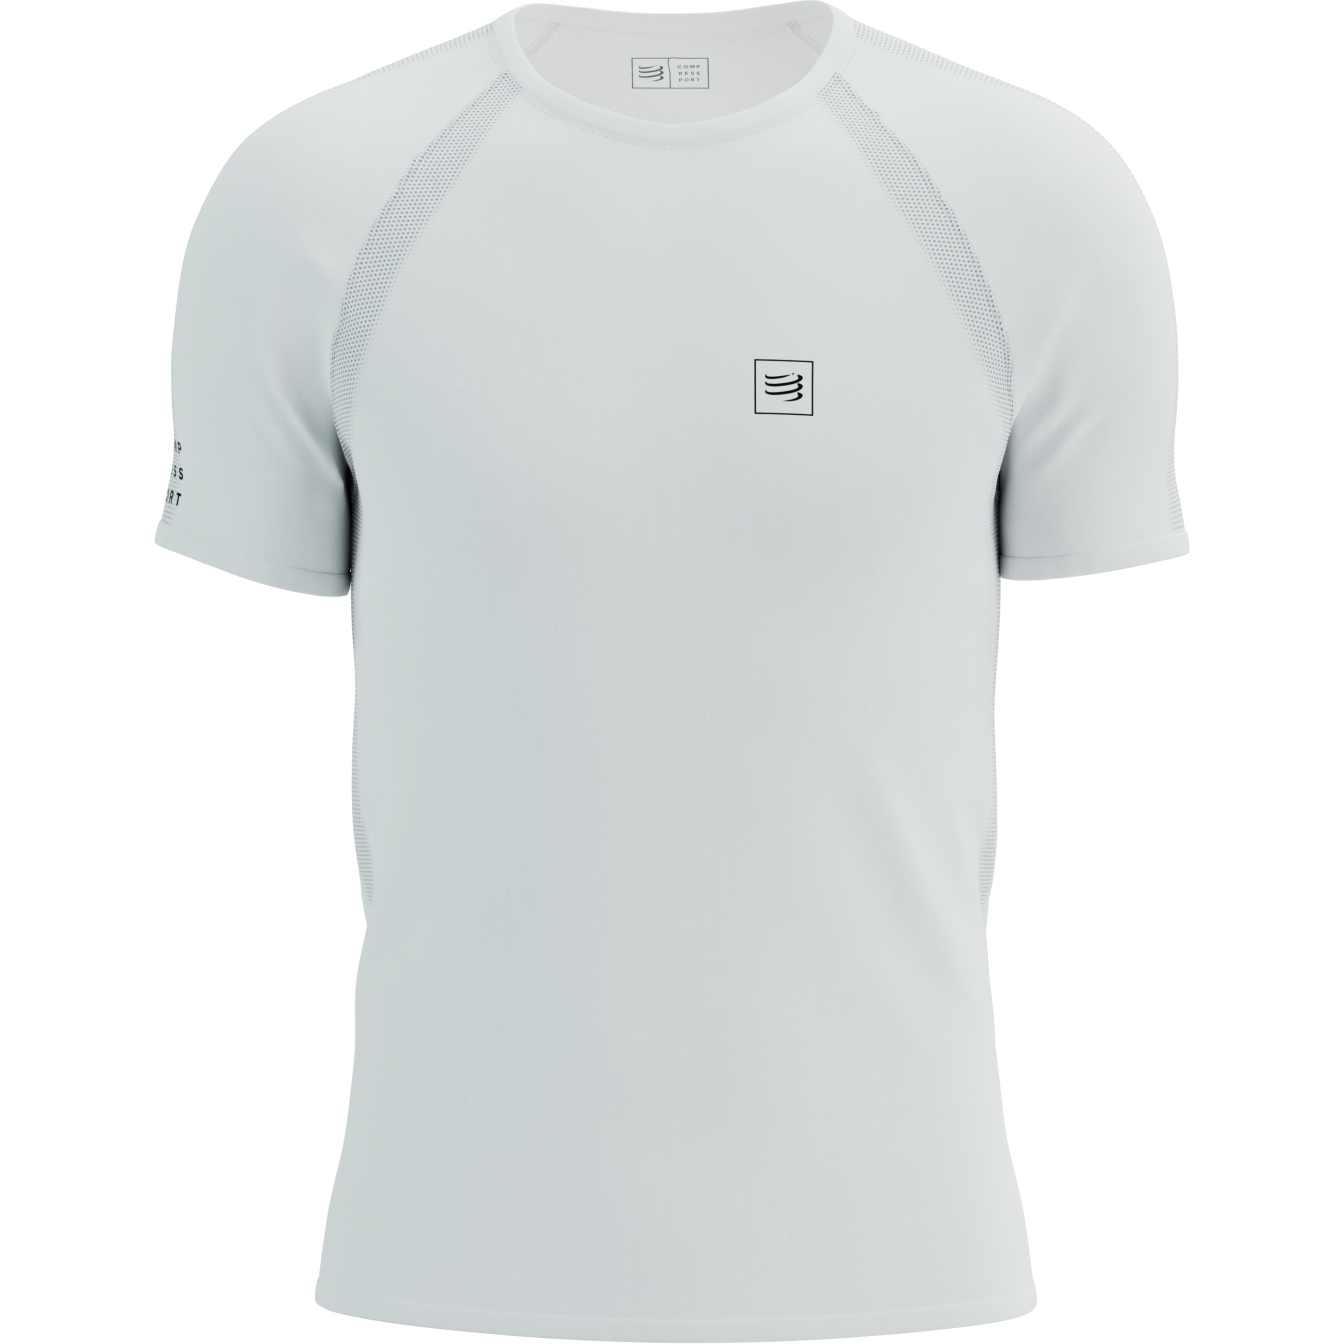 Productfoto van Compressport Training T-Shirt - wit